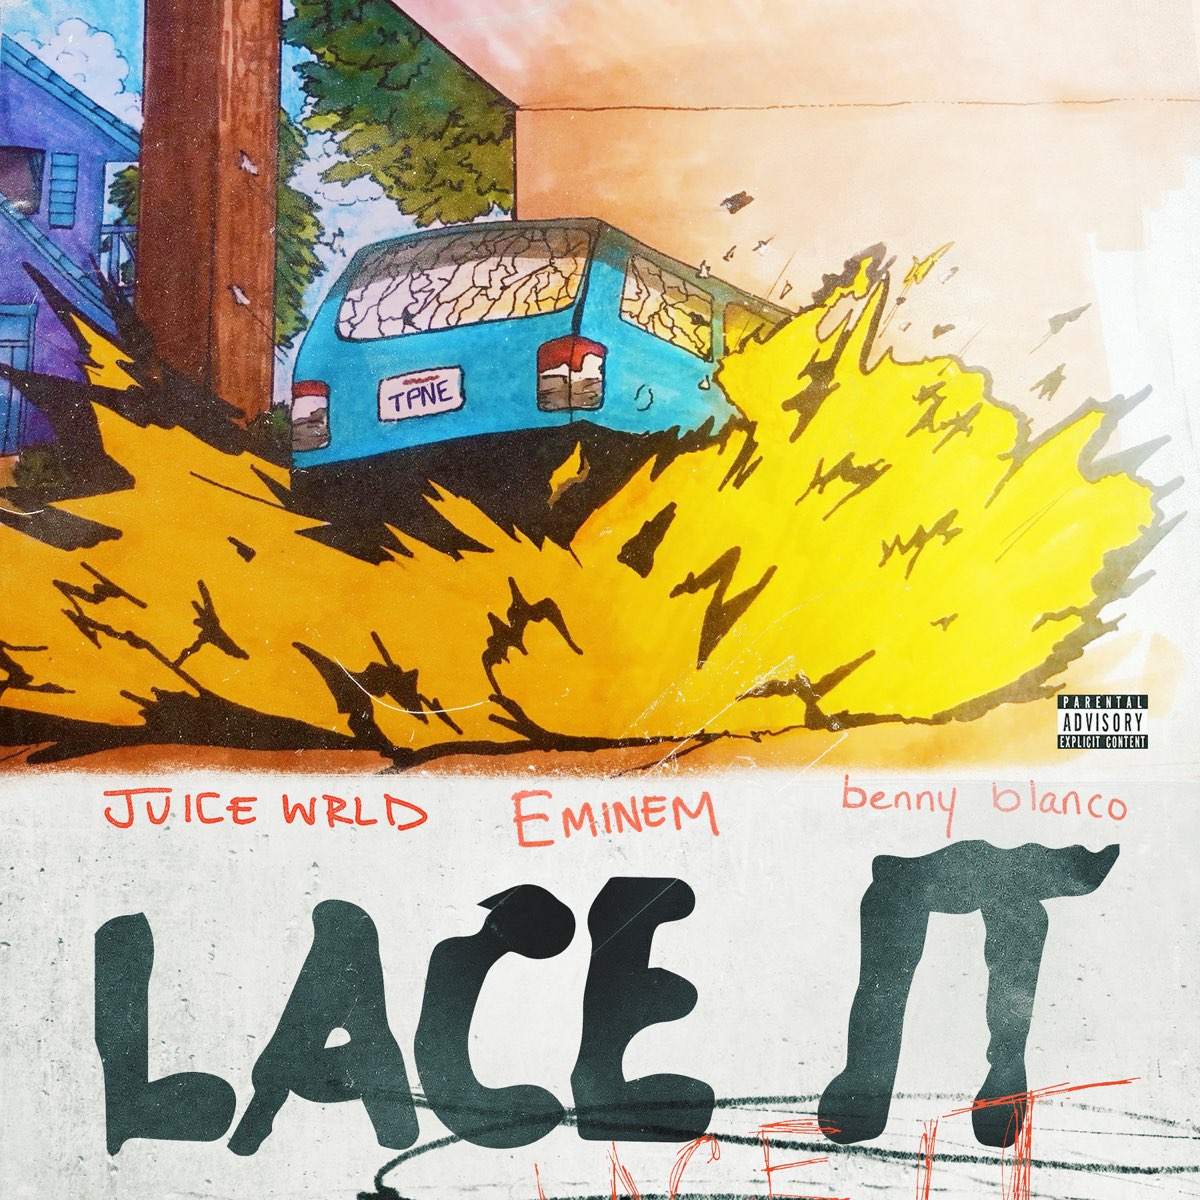 Lace It - Single - Album by Juice WRLD, Eminem & benny blanco - Apple Music